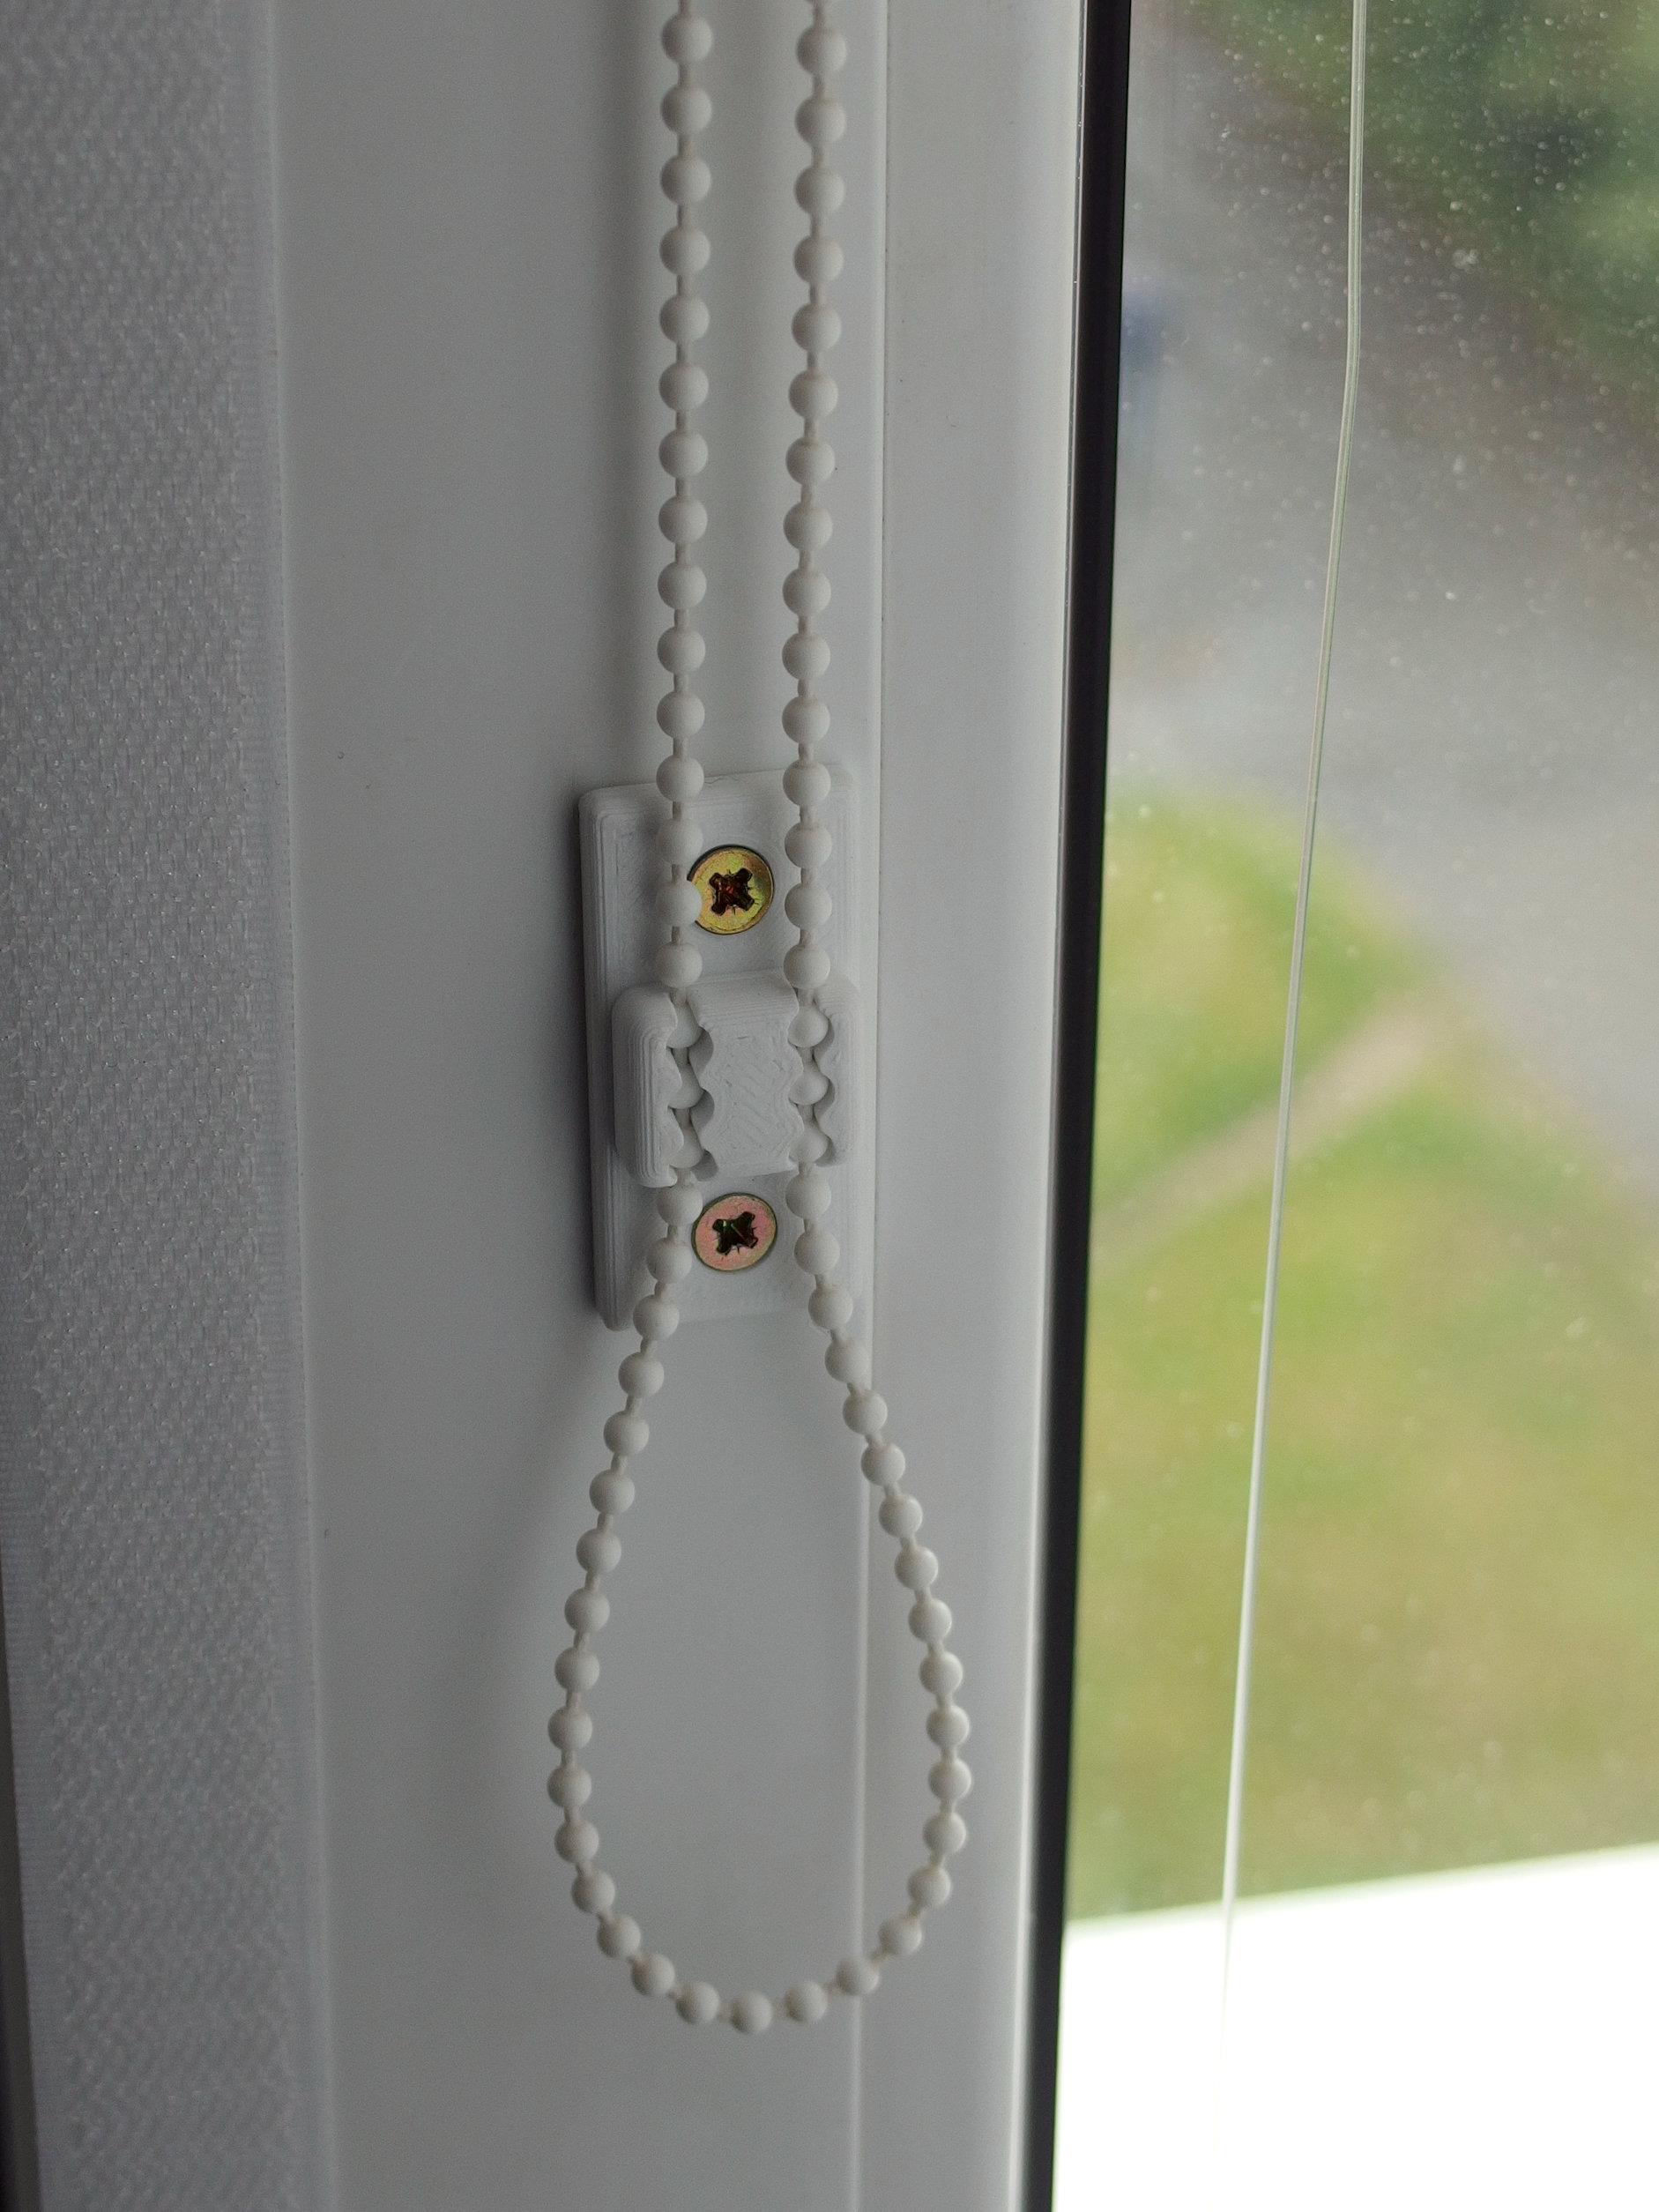 Window blind chain holder by Johny5